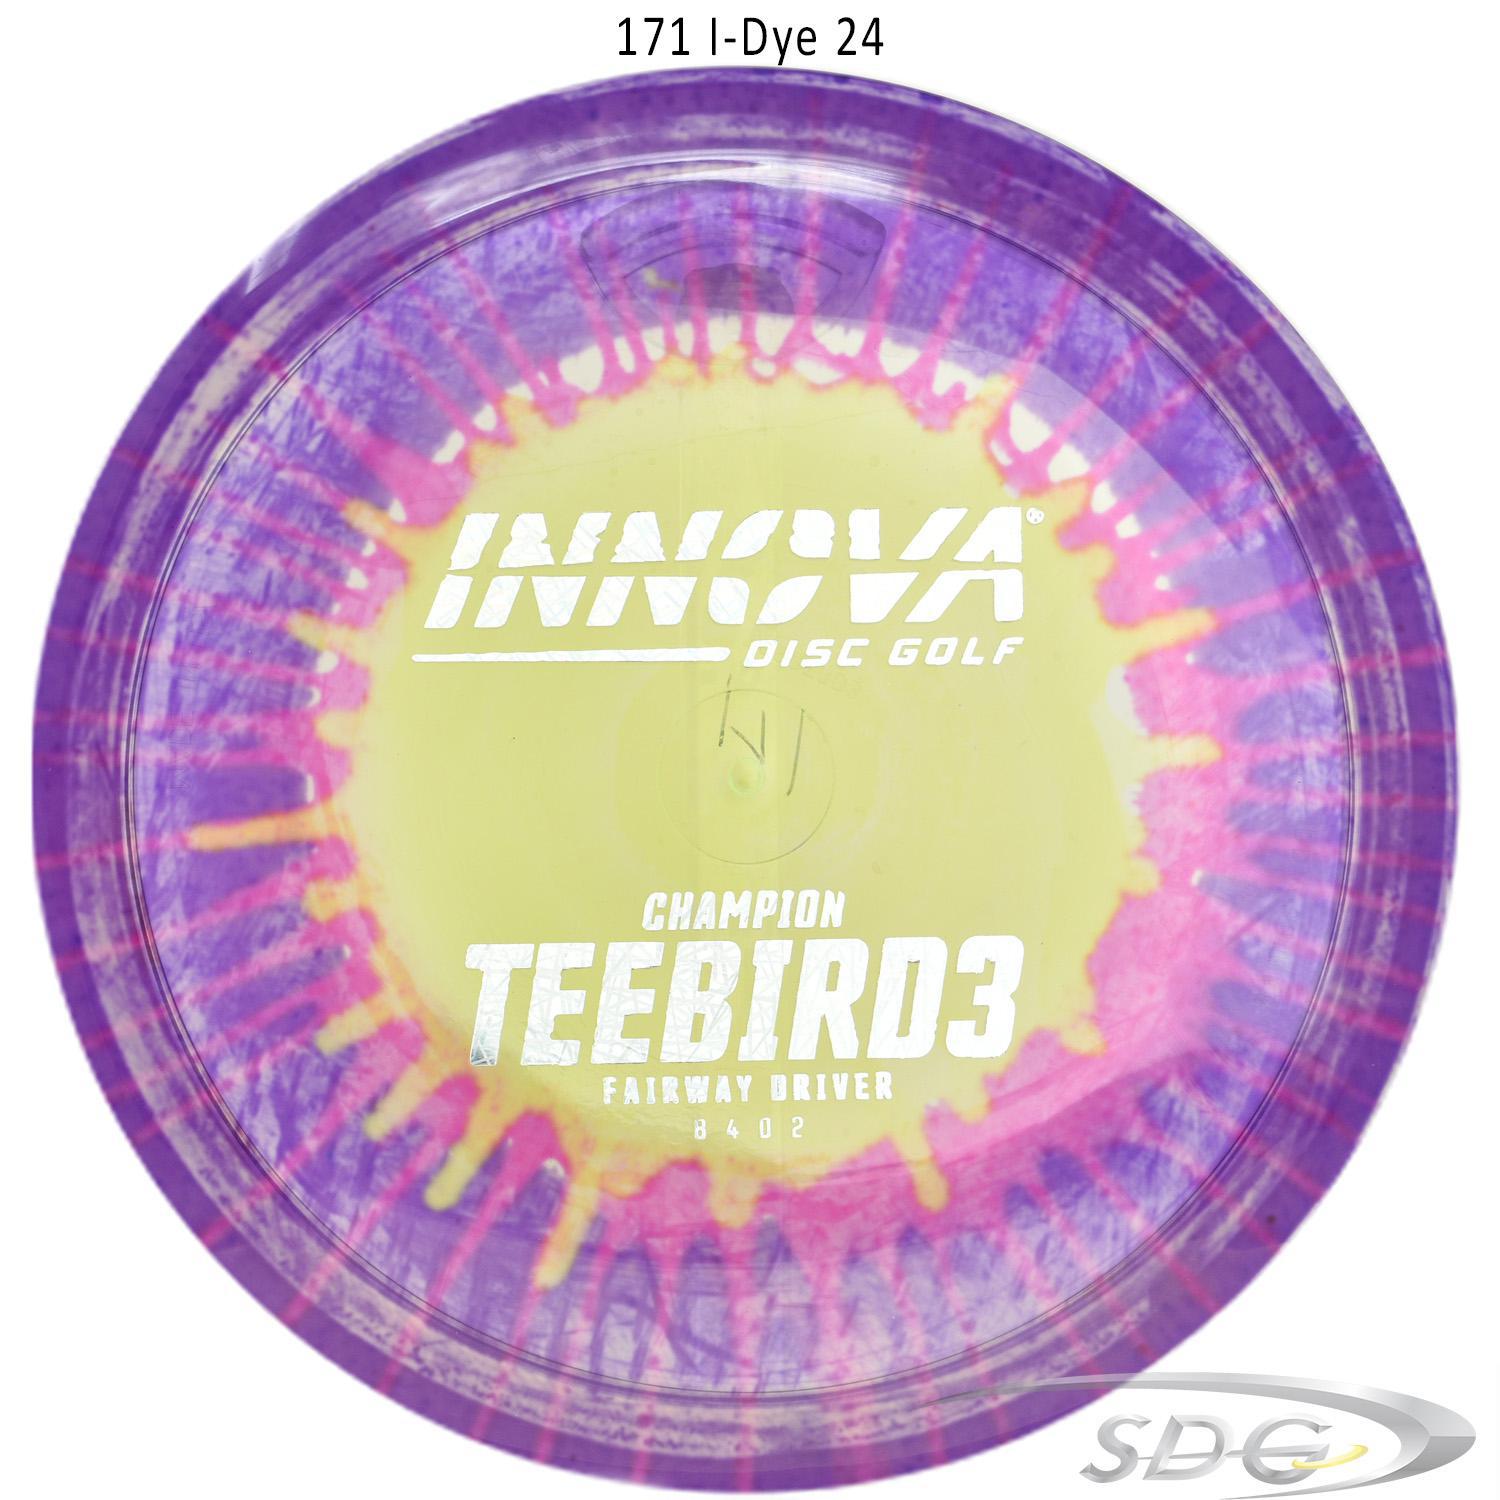 innova-champion-teebird3-i-dye-disc-golf-fairway-driver 171 I-Dye 24 